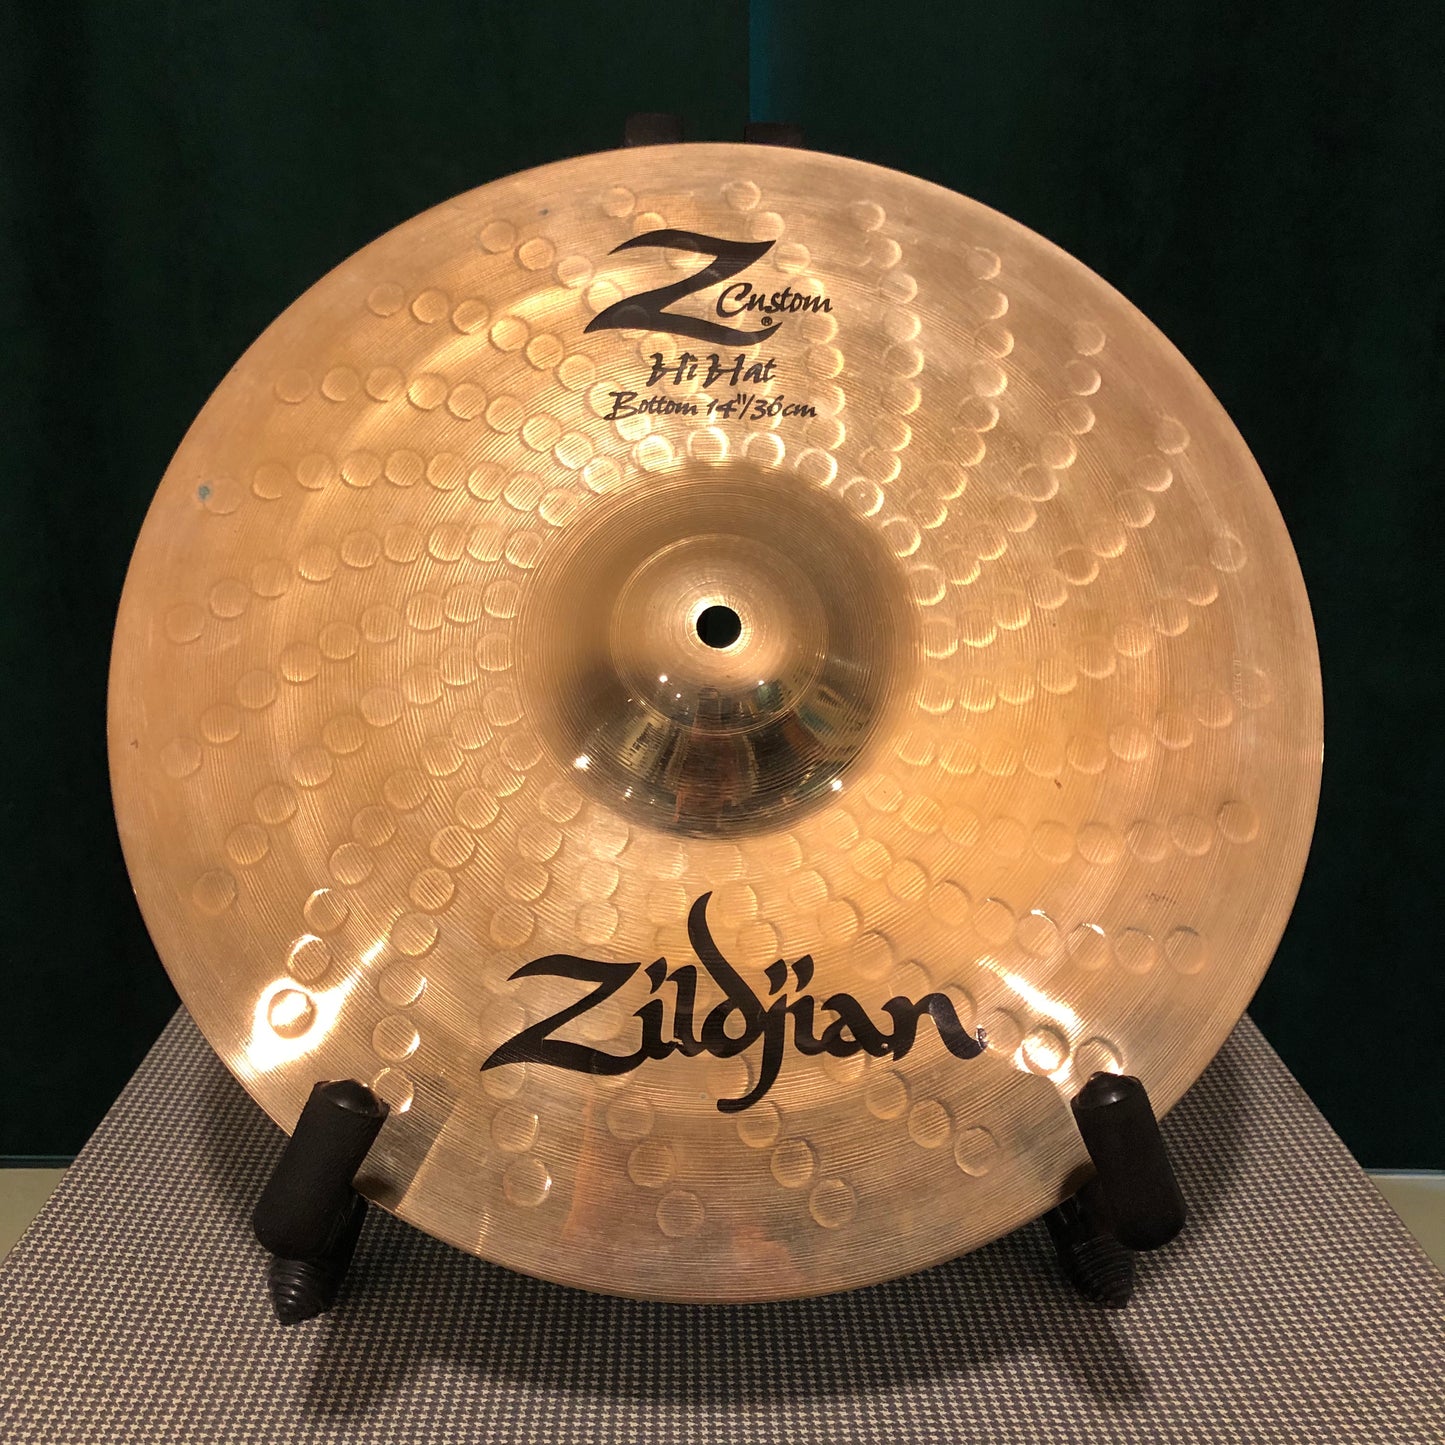 14" Zildjian 2003 Z Custom Hi-Hat Bottom Single Cymbal 1428g